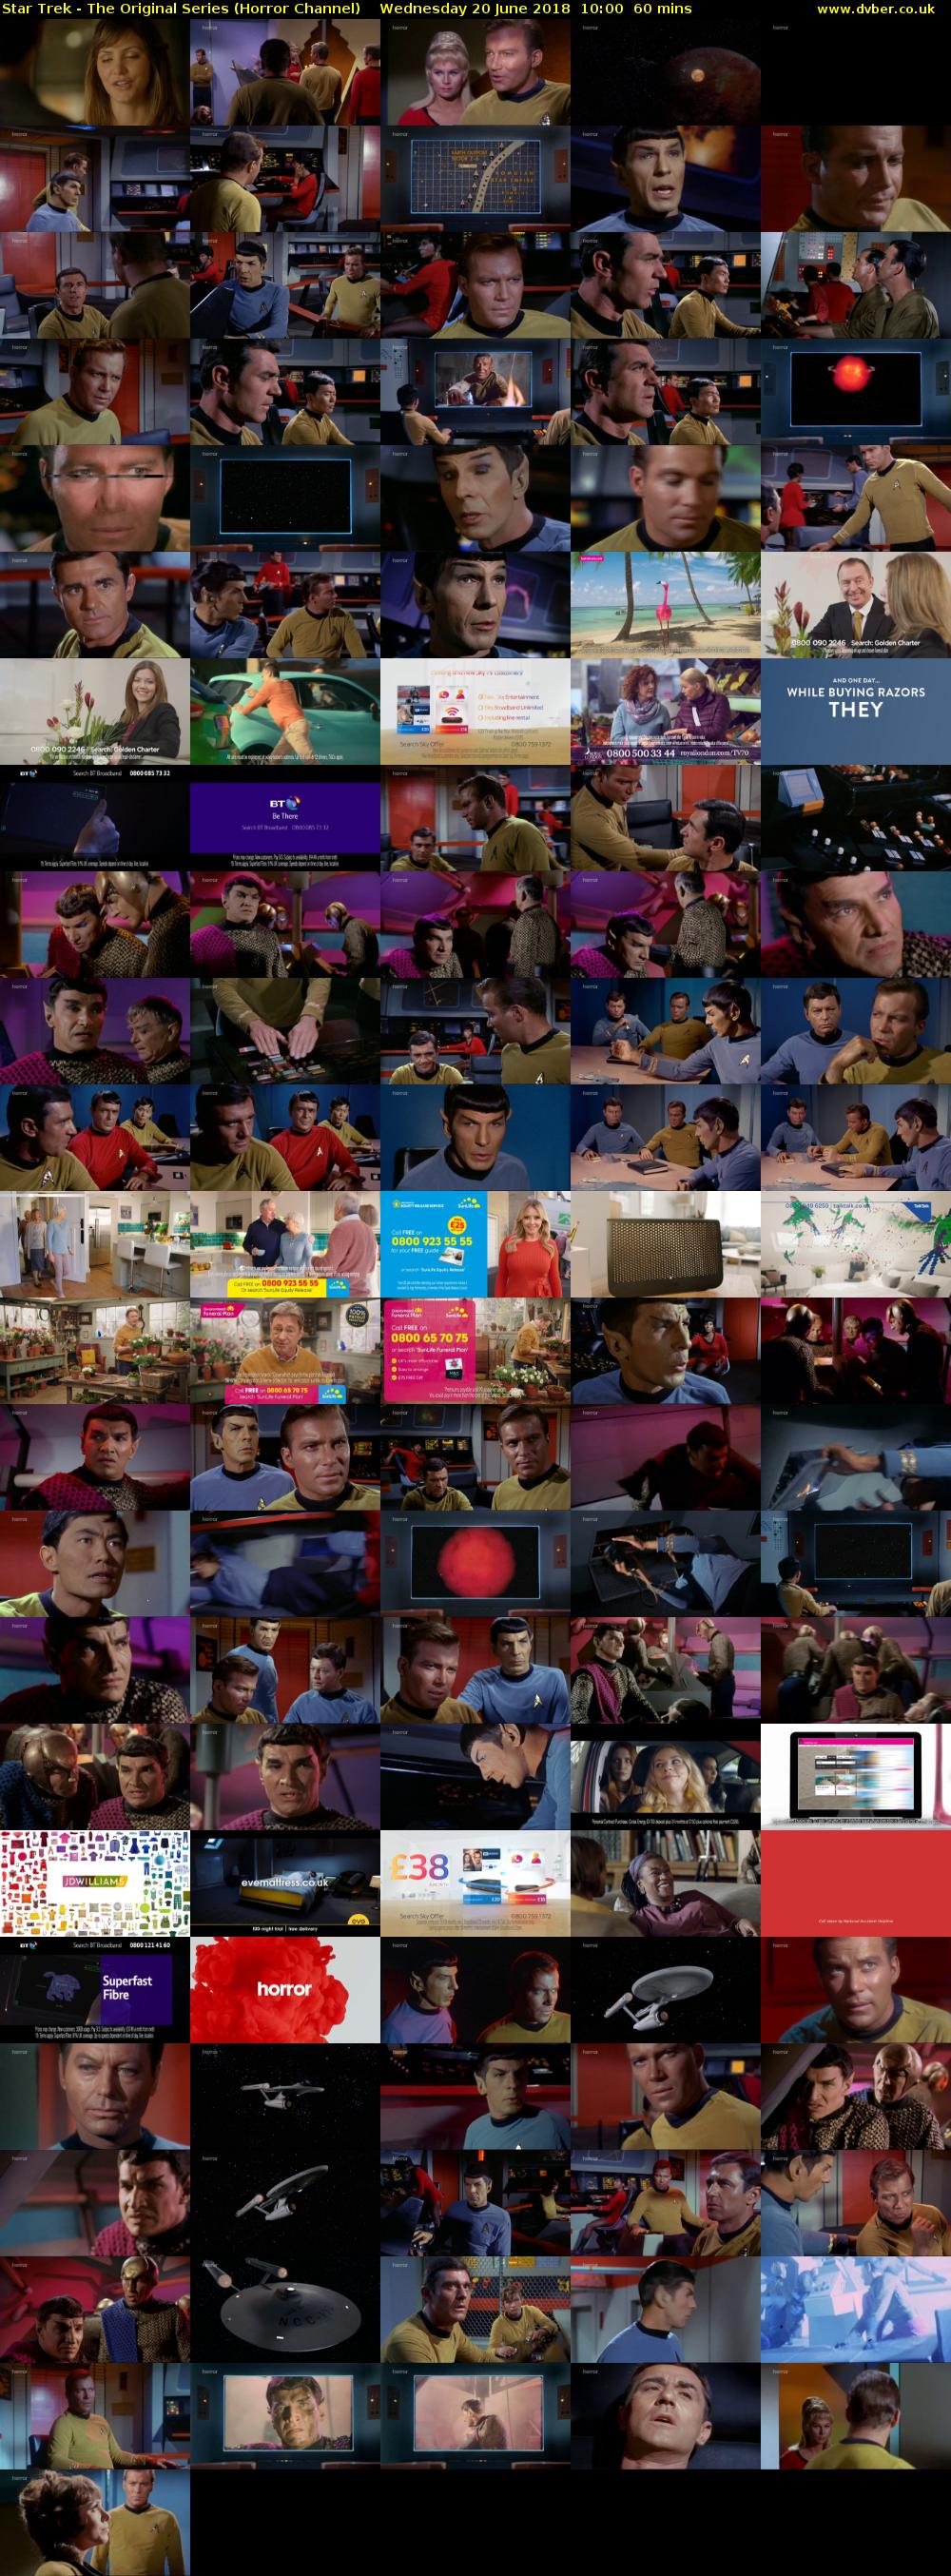 Star Trek - The Original Series (Horror Channel) Wednesday 20 June 2018 10:00 - 11:00